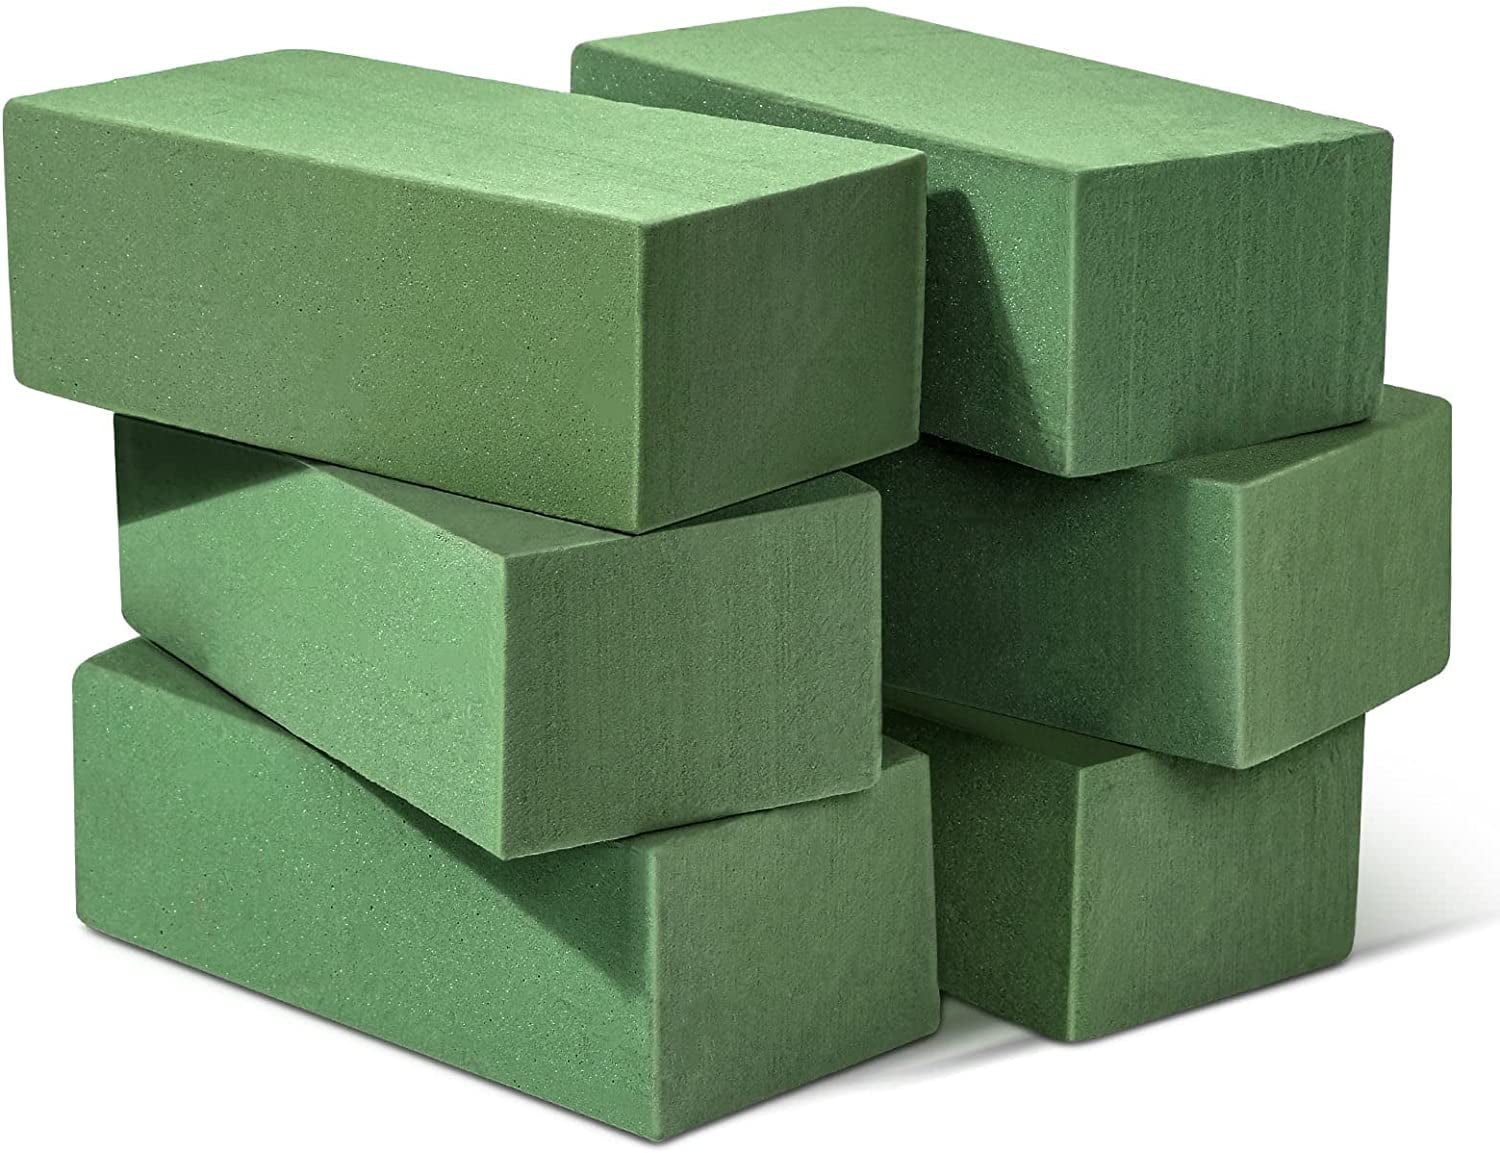 6 Pieces Floral Foam Blocks, Happon Wet Foam Green Bricks for